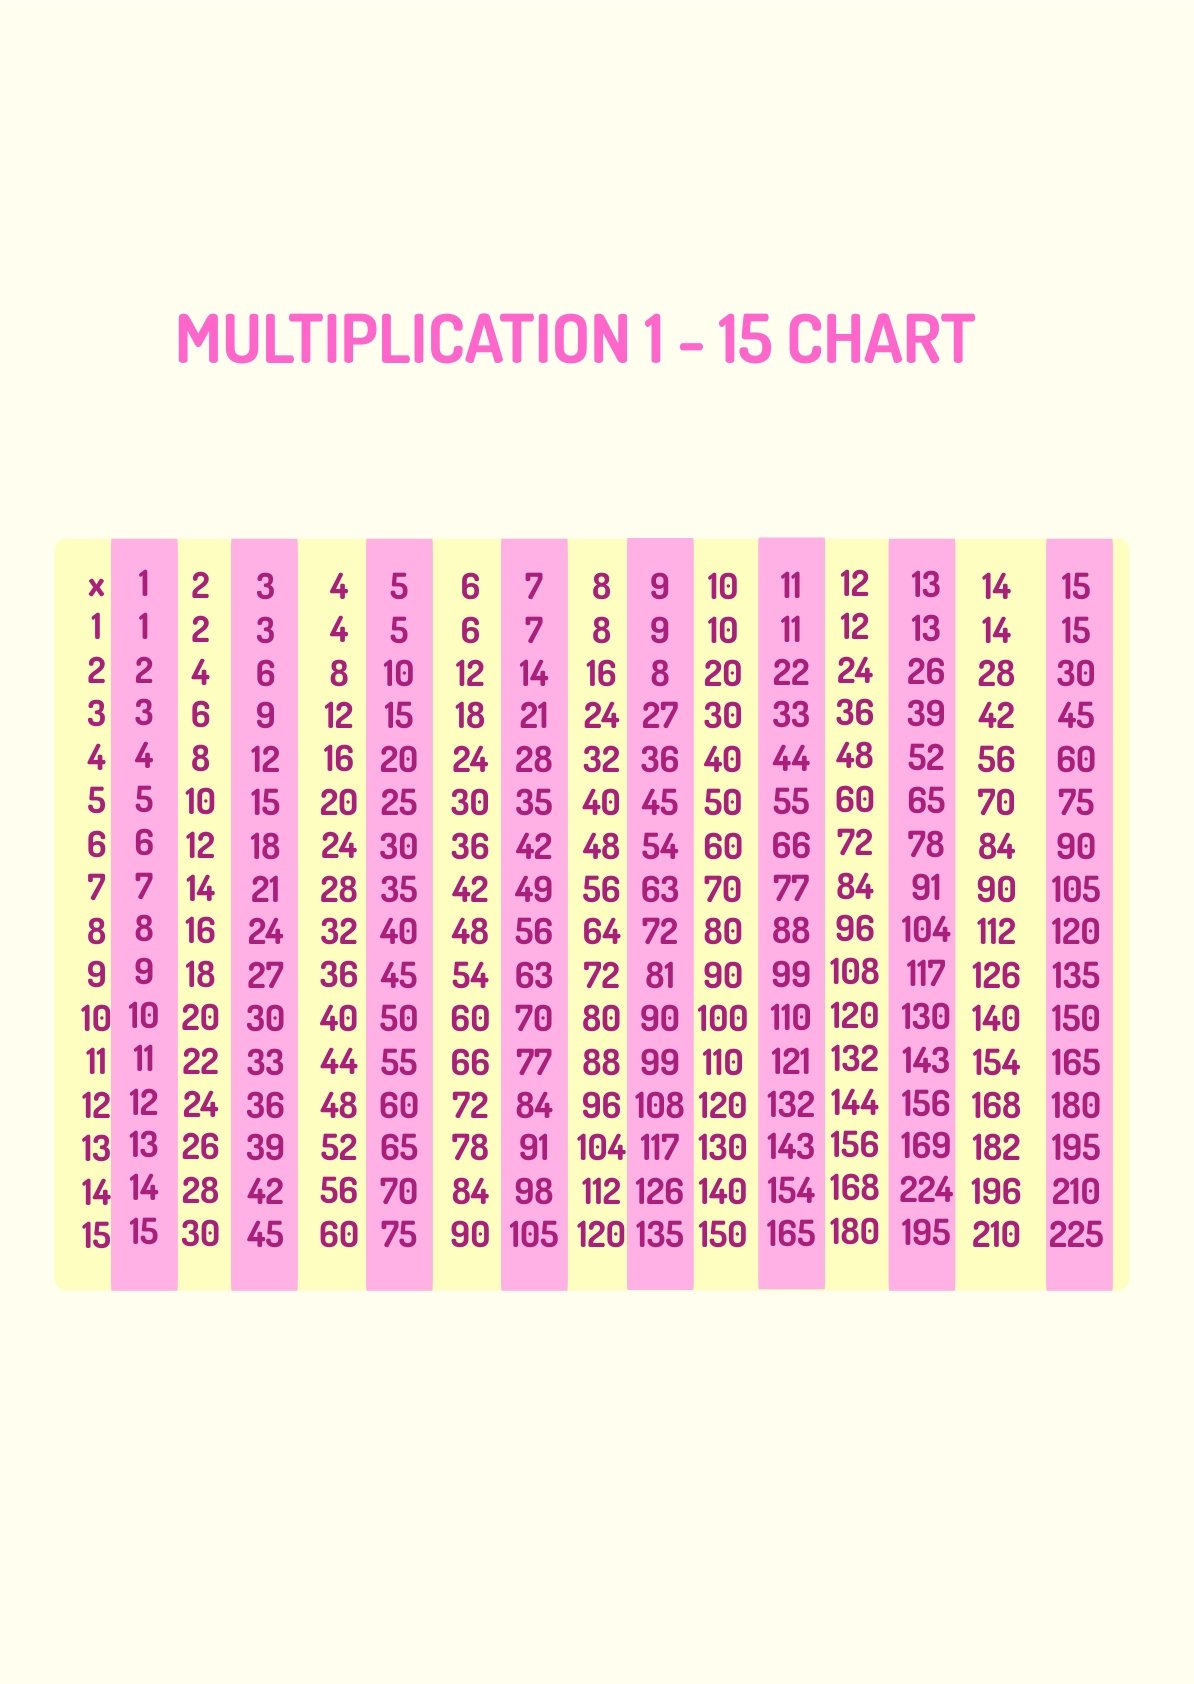 Multiplication Chart 1 - 15 in PDF, Illustrator